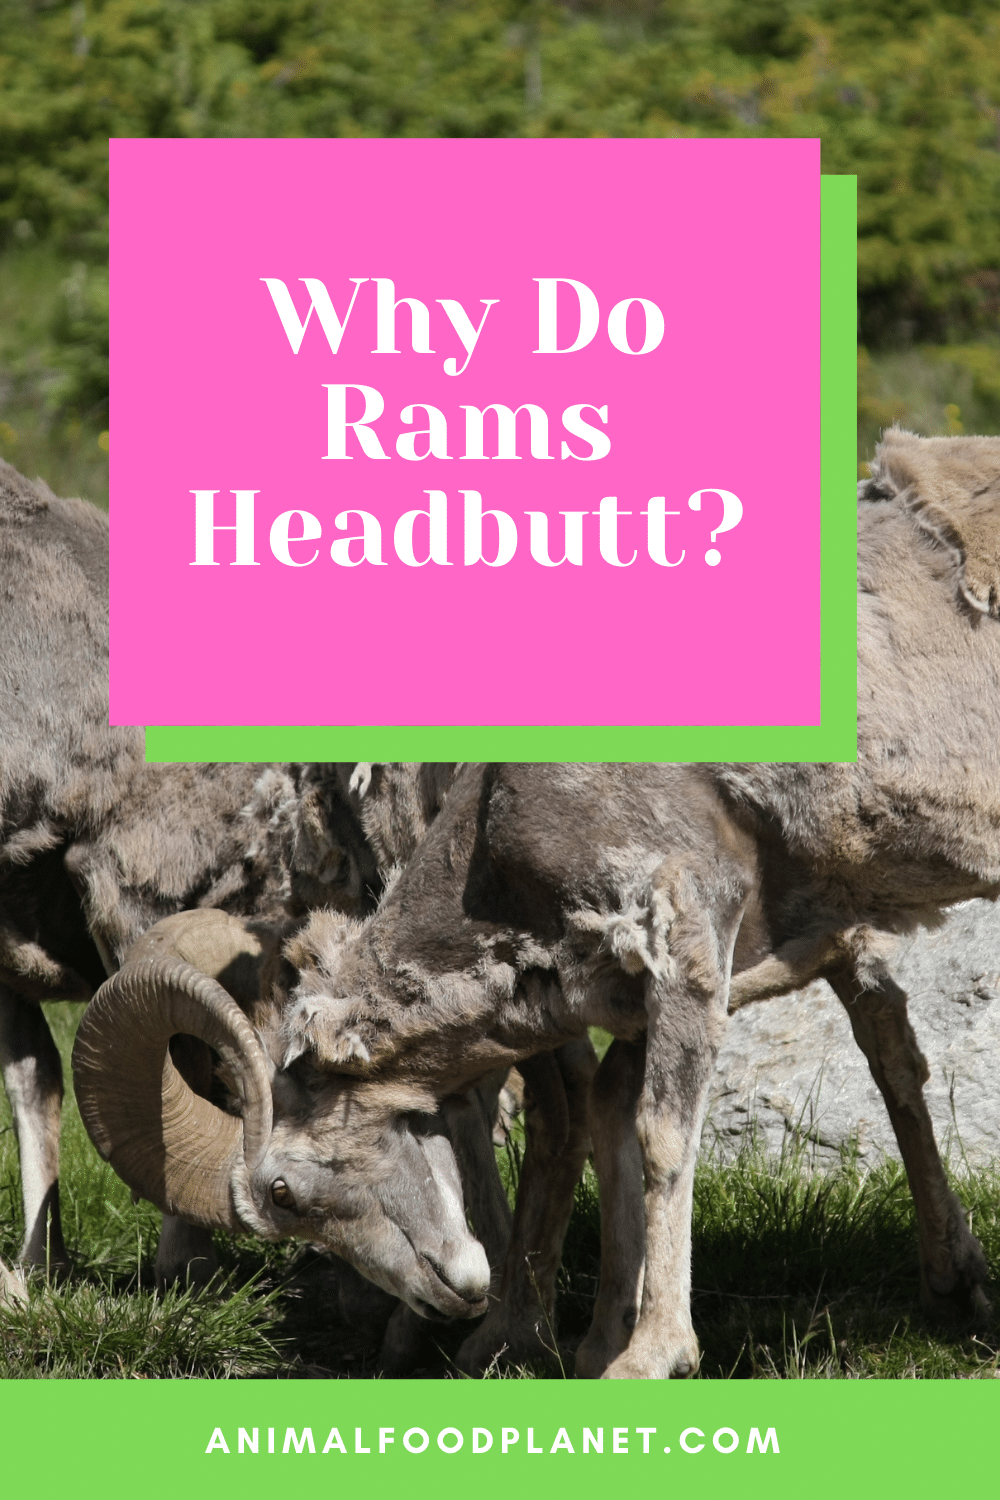 Why Do Rams Headbutt?